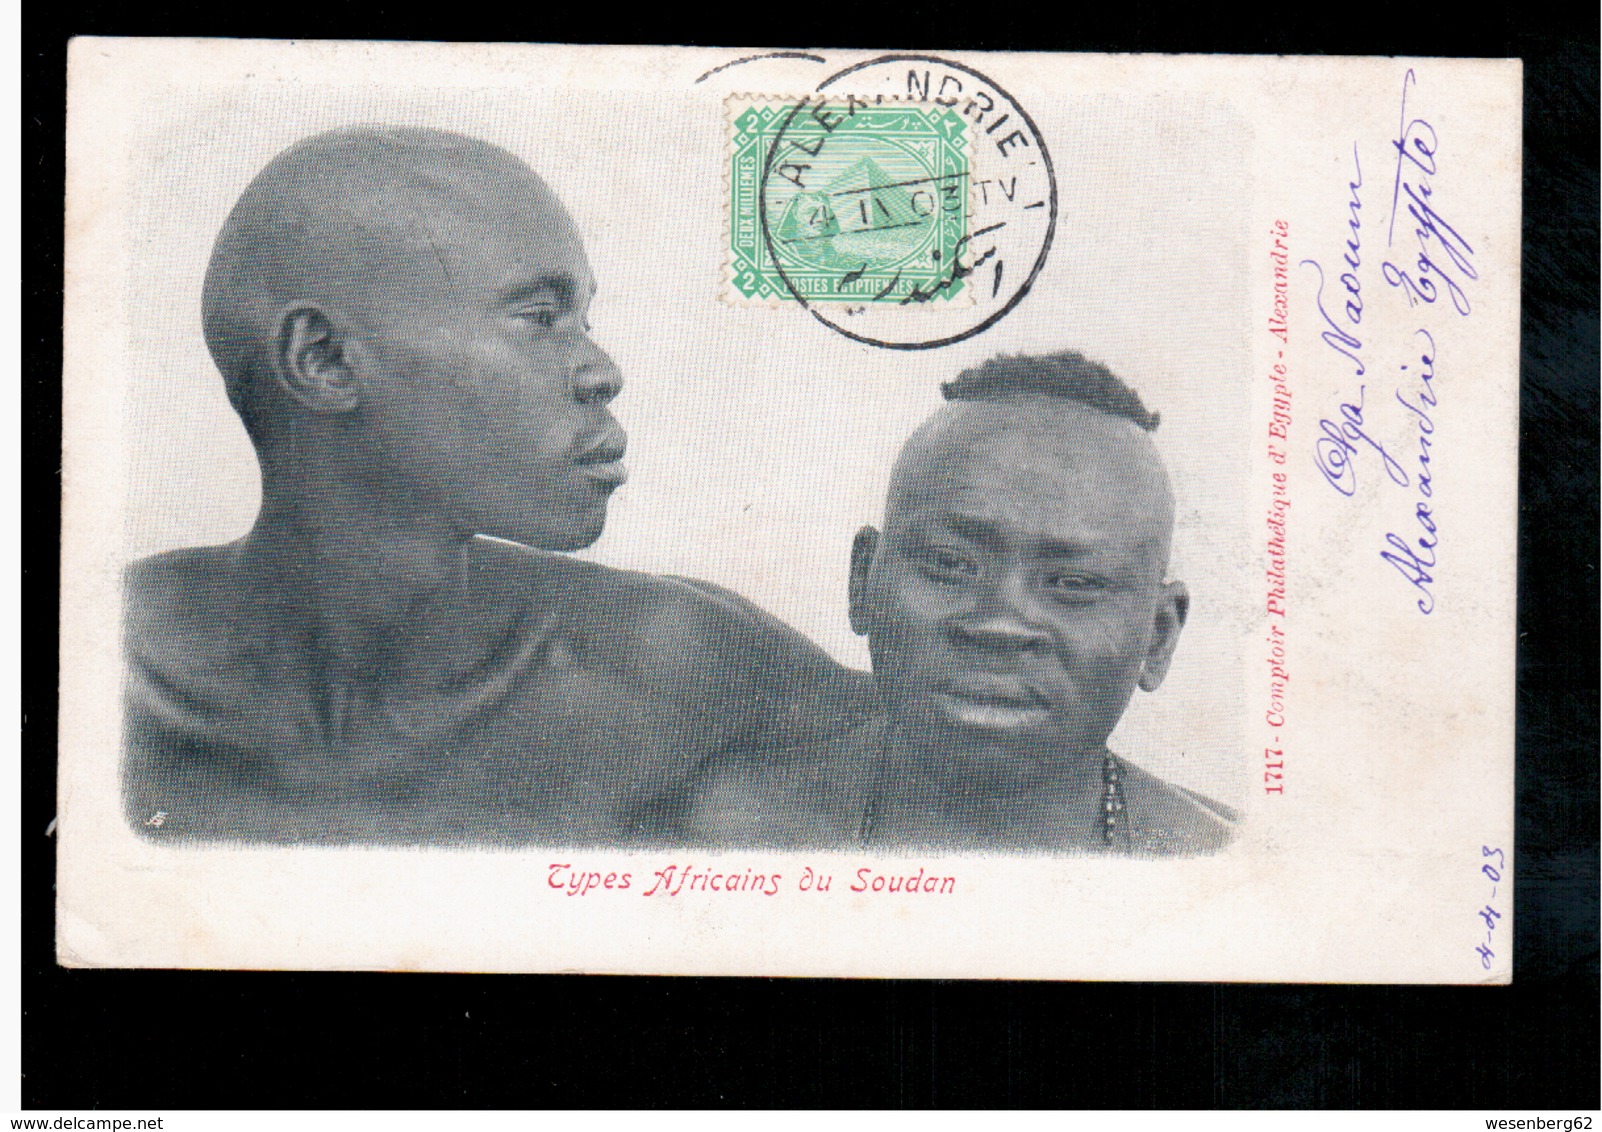 SOUDAN Types Africains Du Soudan 1903 Old Postcard - Sudán